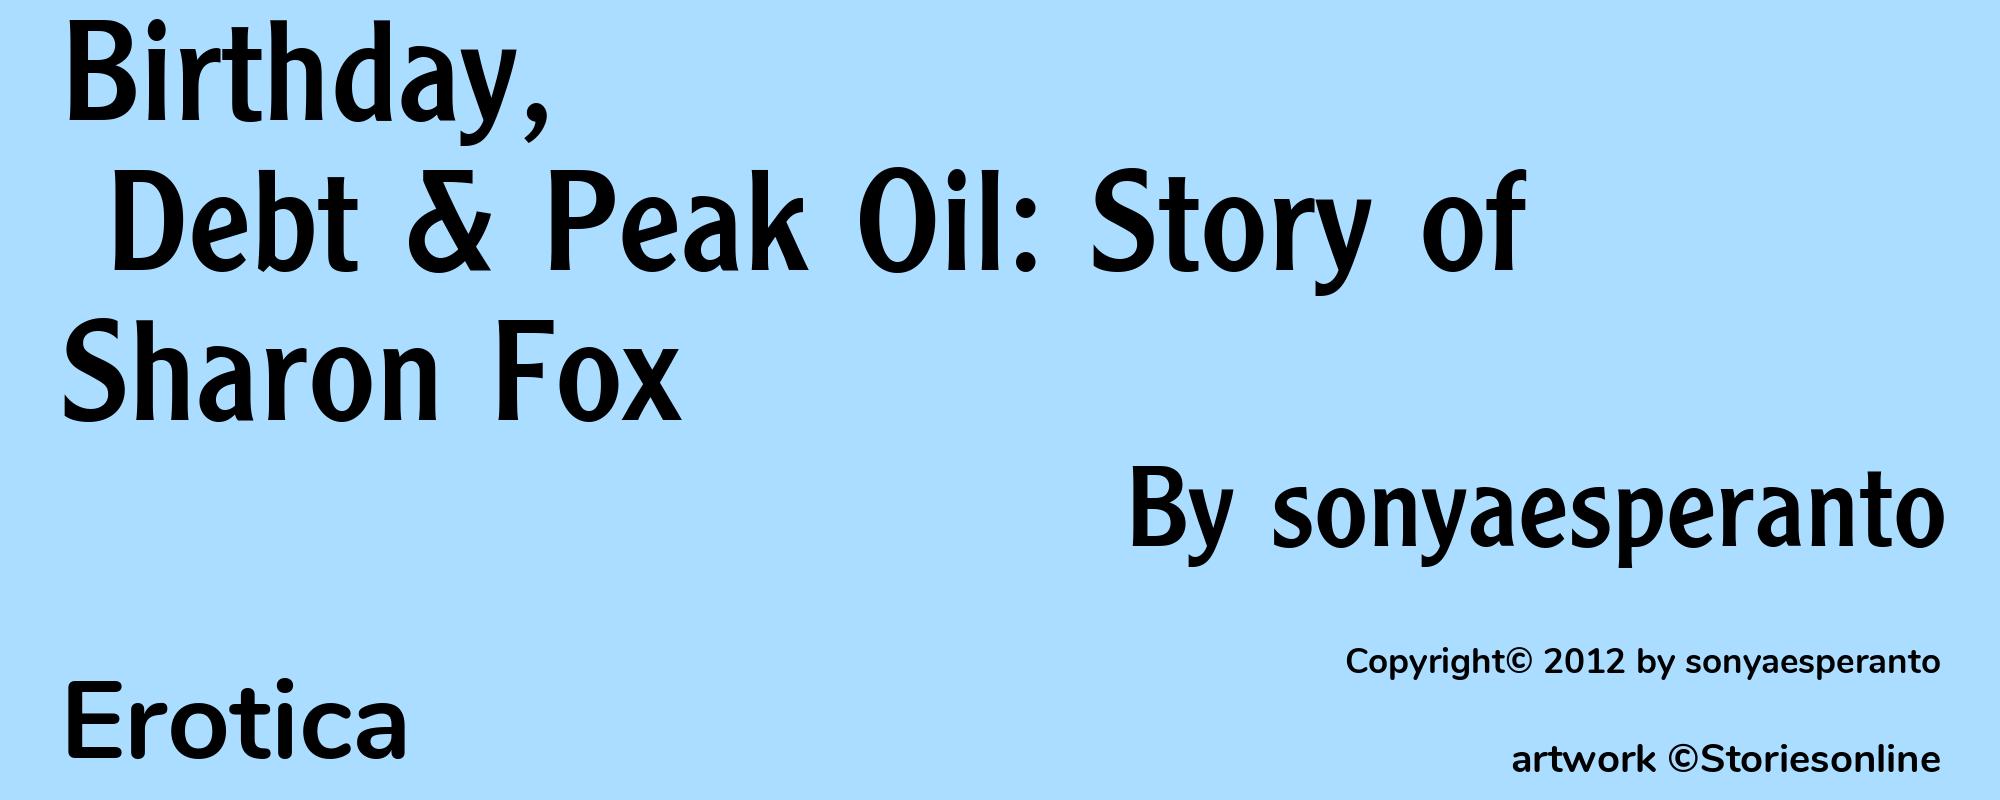 Birthday, Debt & Peak Oil: Story of Sharon Fox - Cover